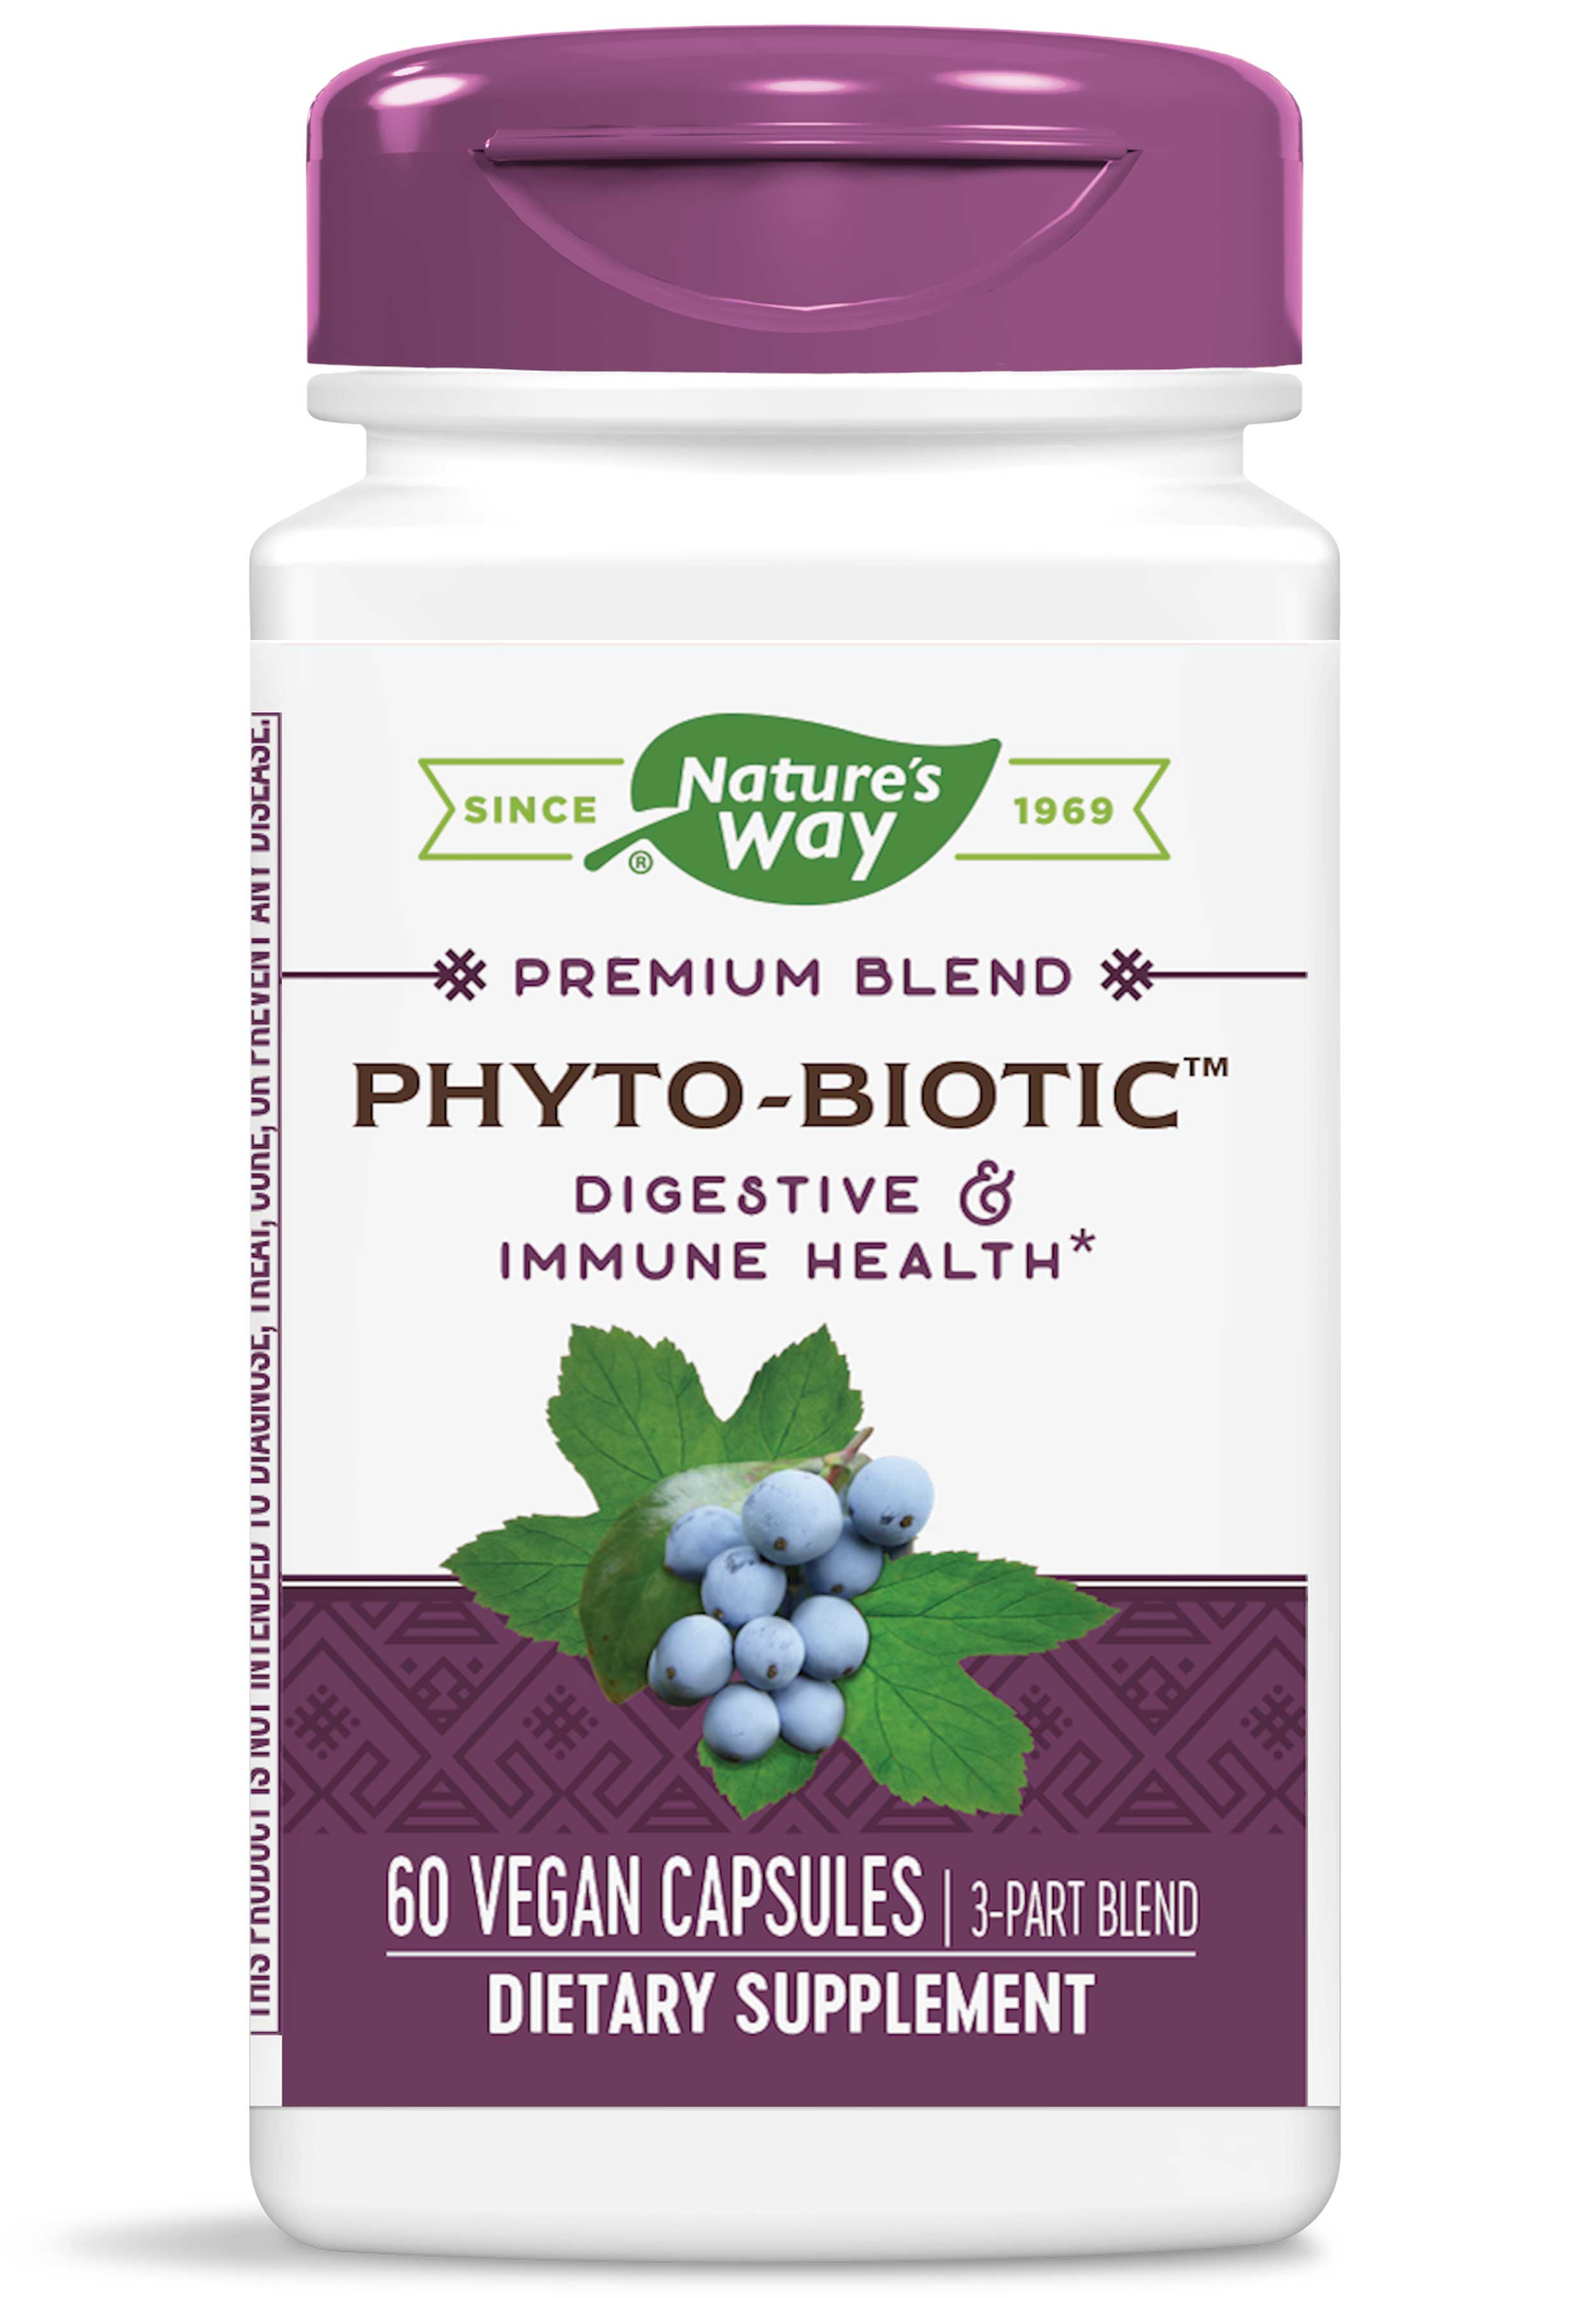 Nature's Way Phyto-Biotic Premium Blend